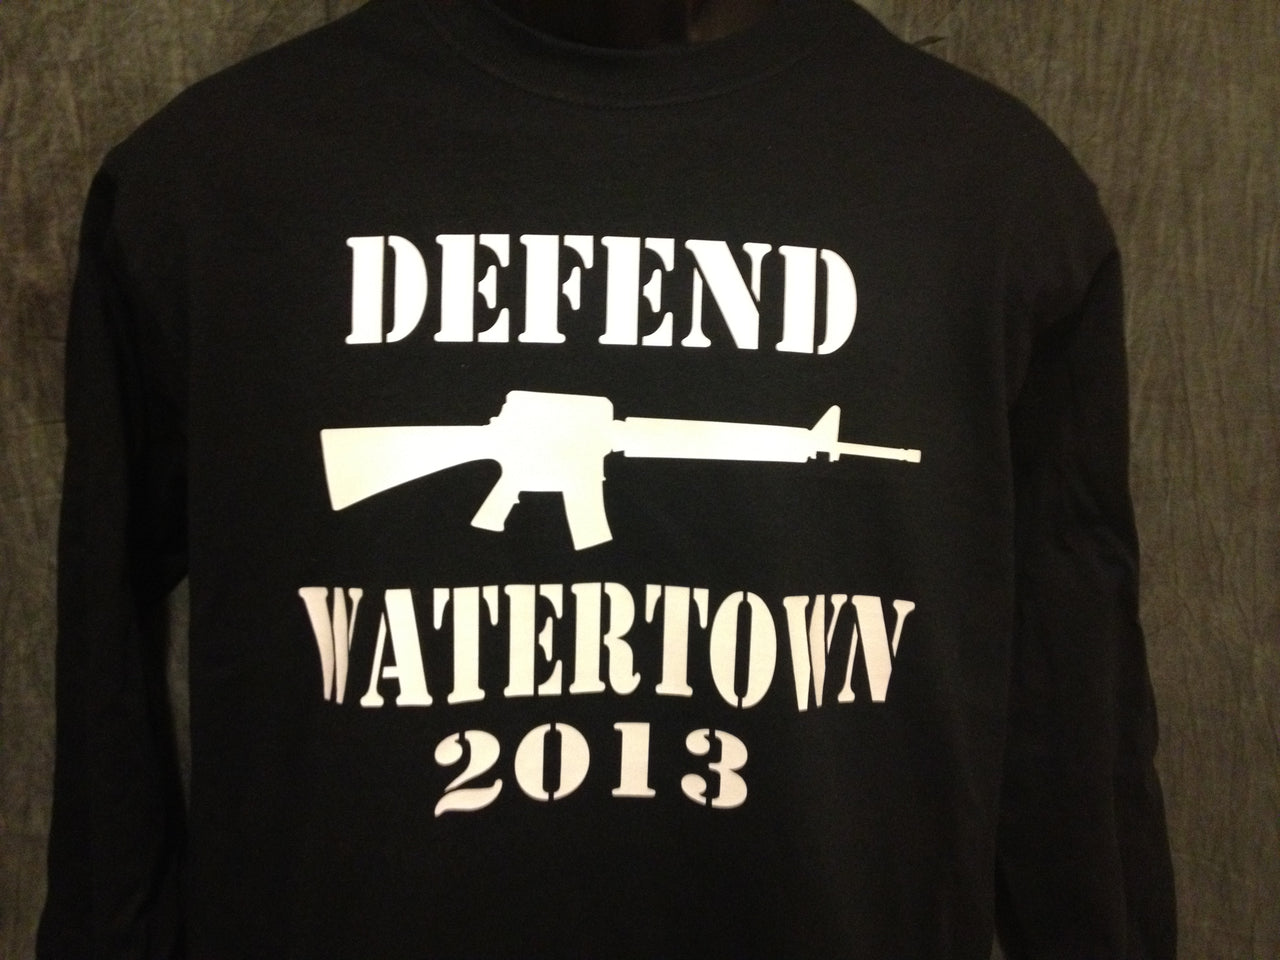 Defend Watertown 2013 Longsleeve Tshirt: Black With White Print - TshirtNow.net - 4